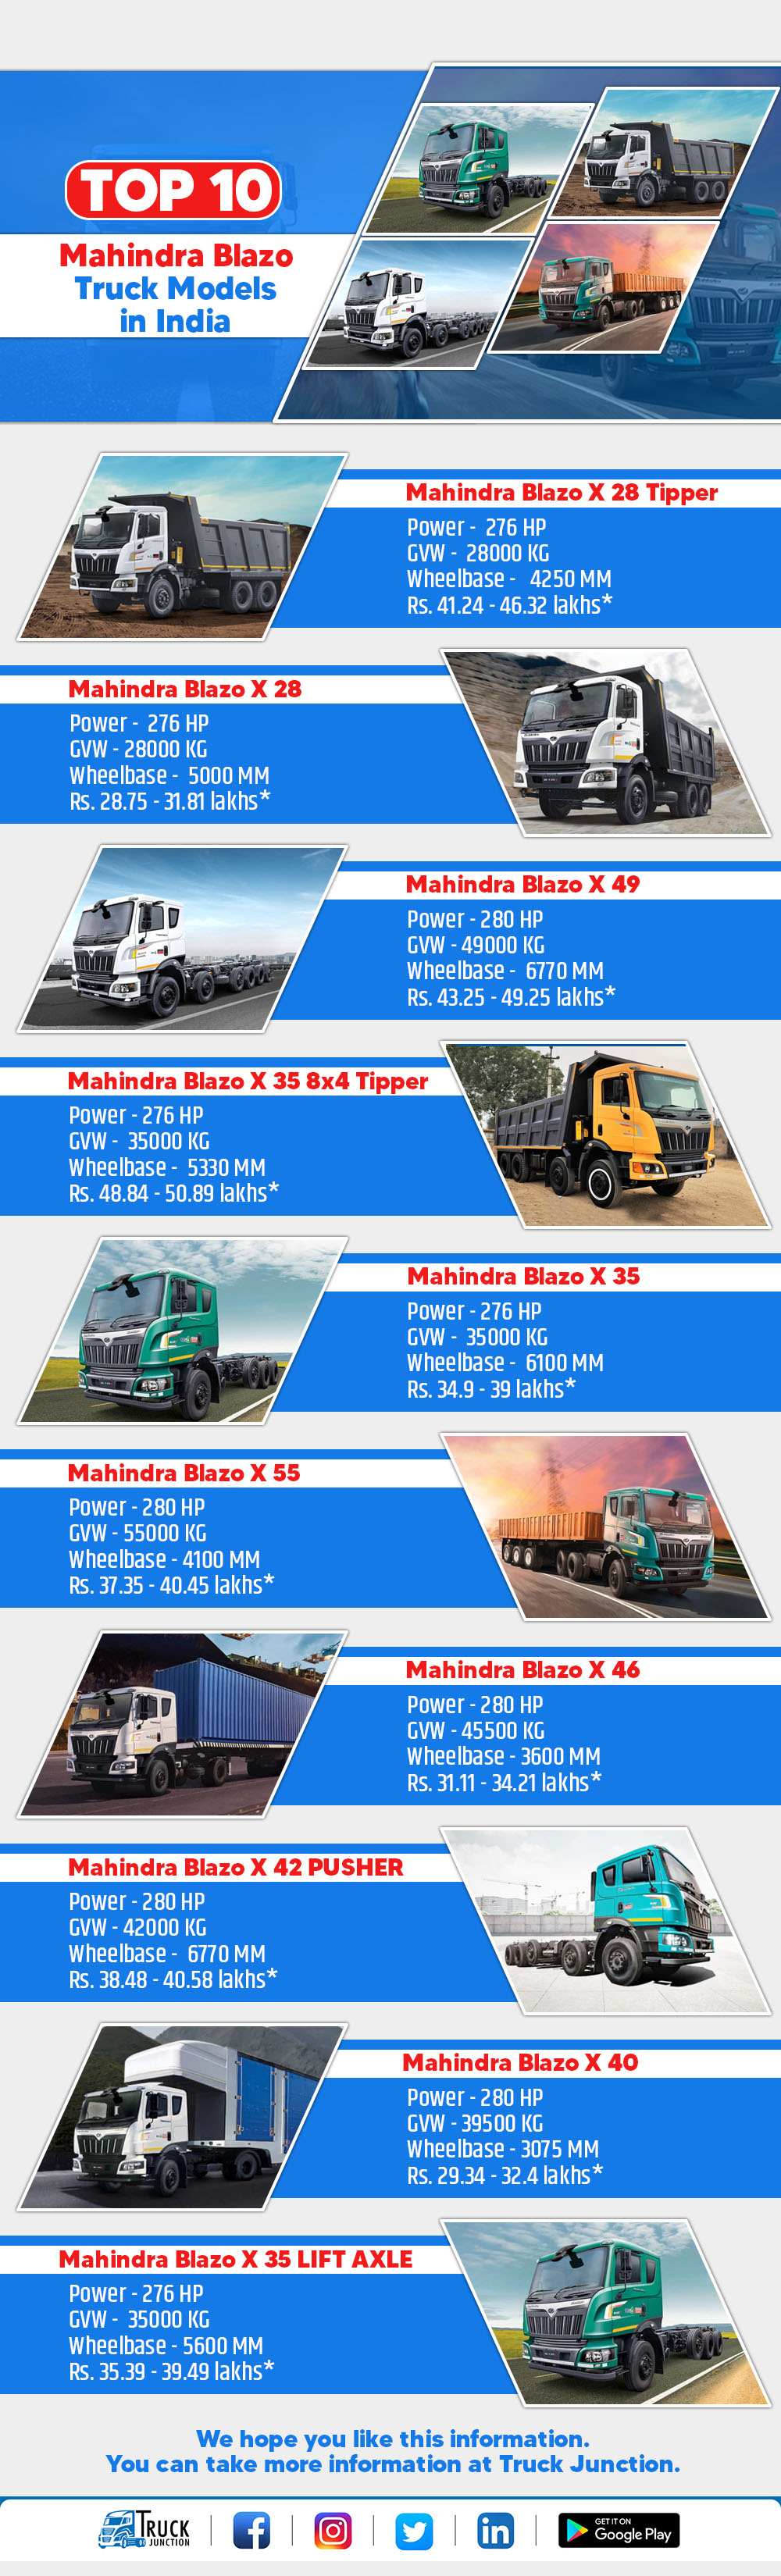 Top 10 Mahindra Blazo Truck Models - Infographic 